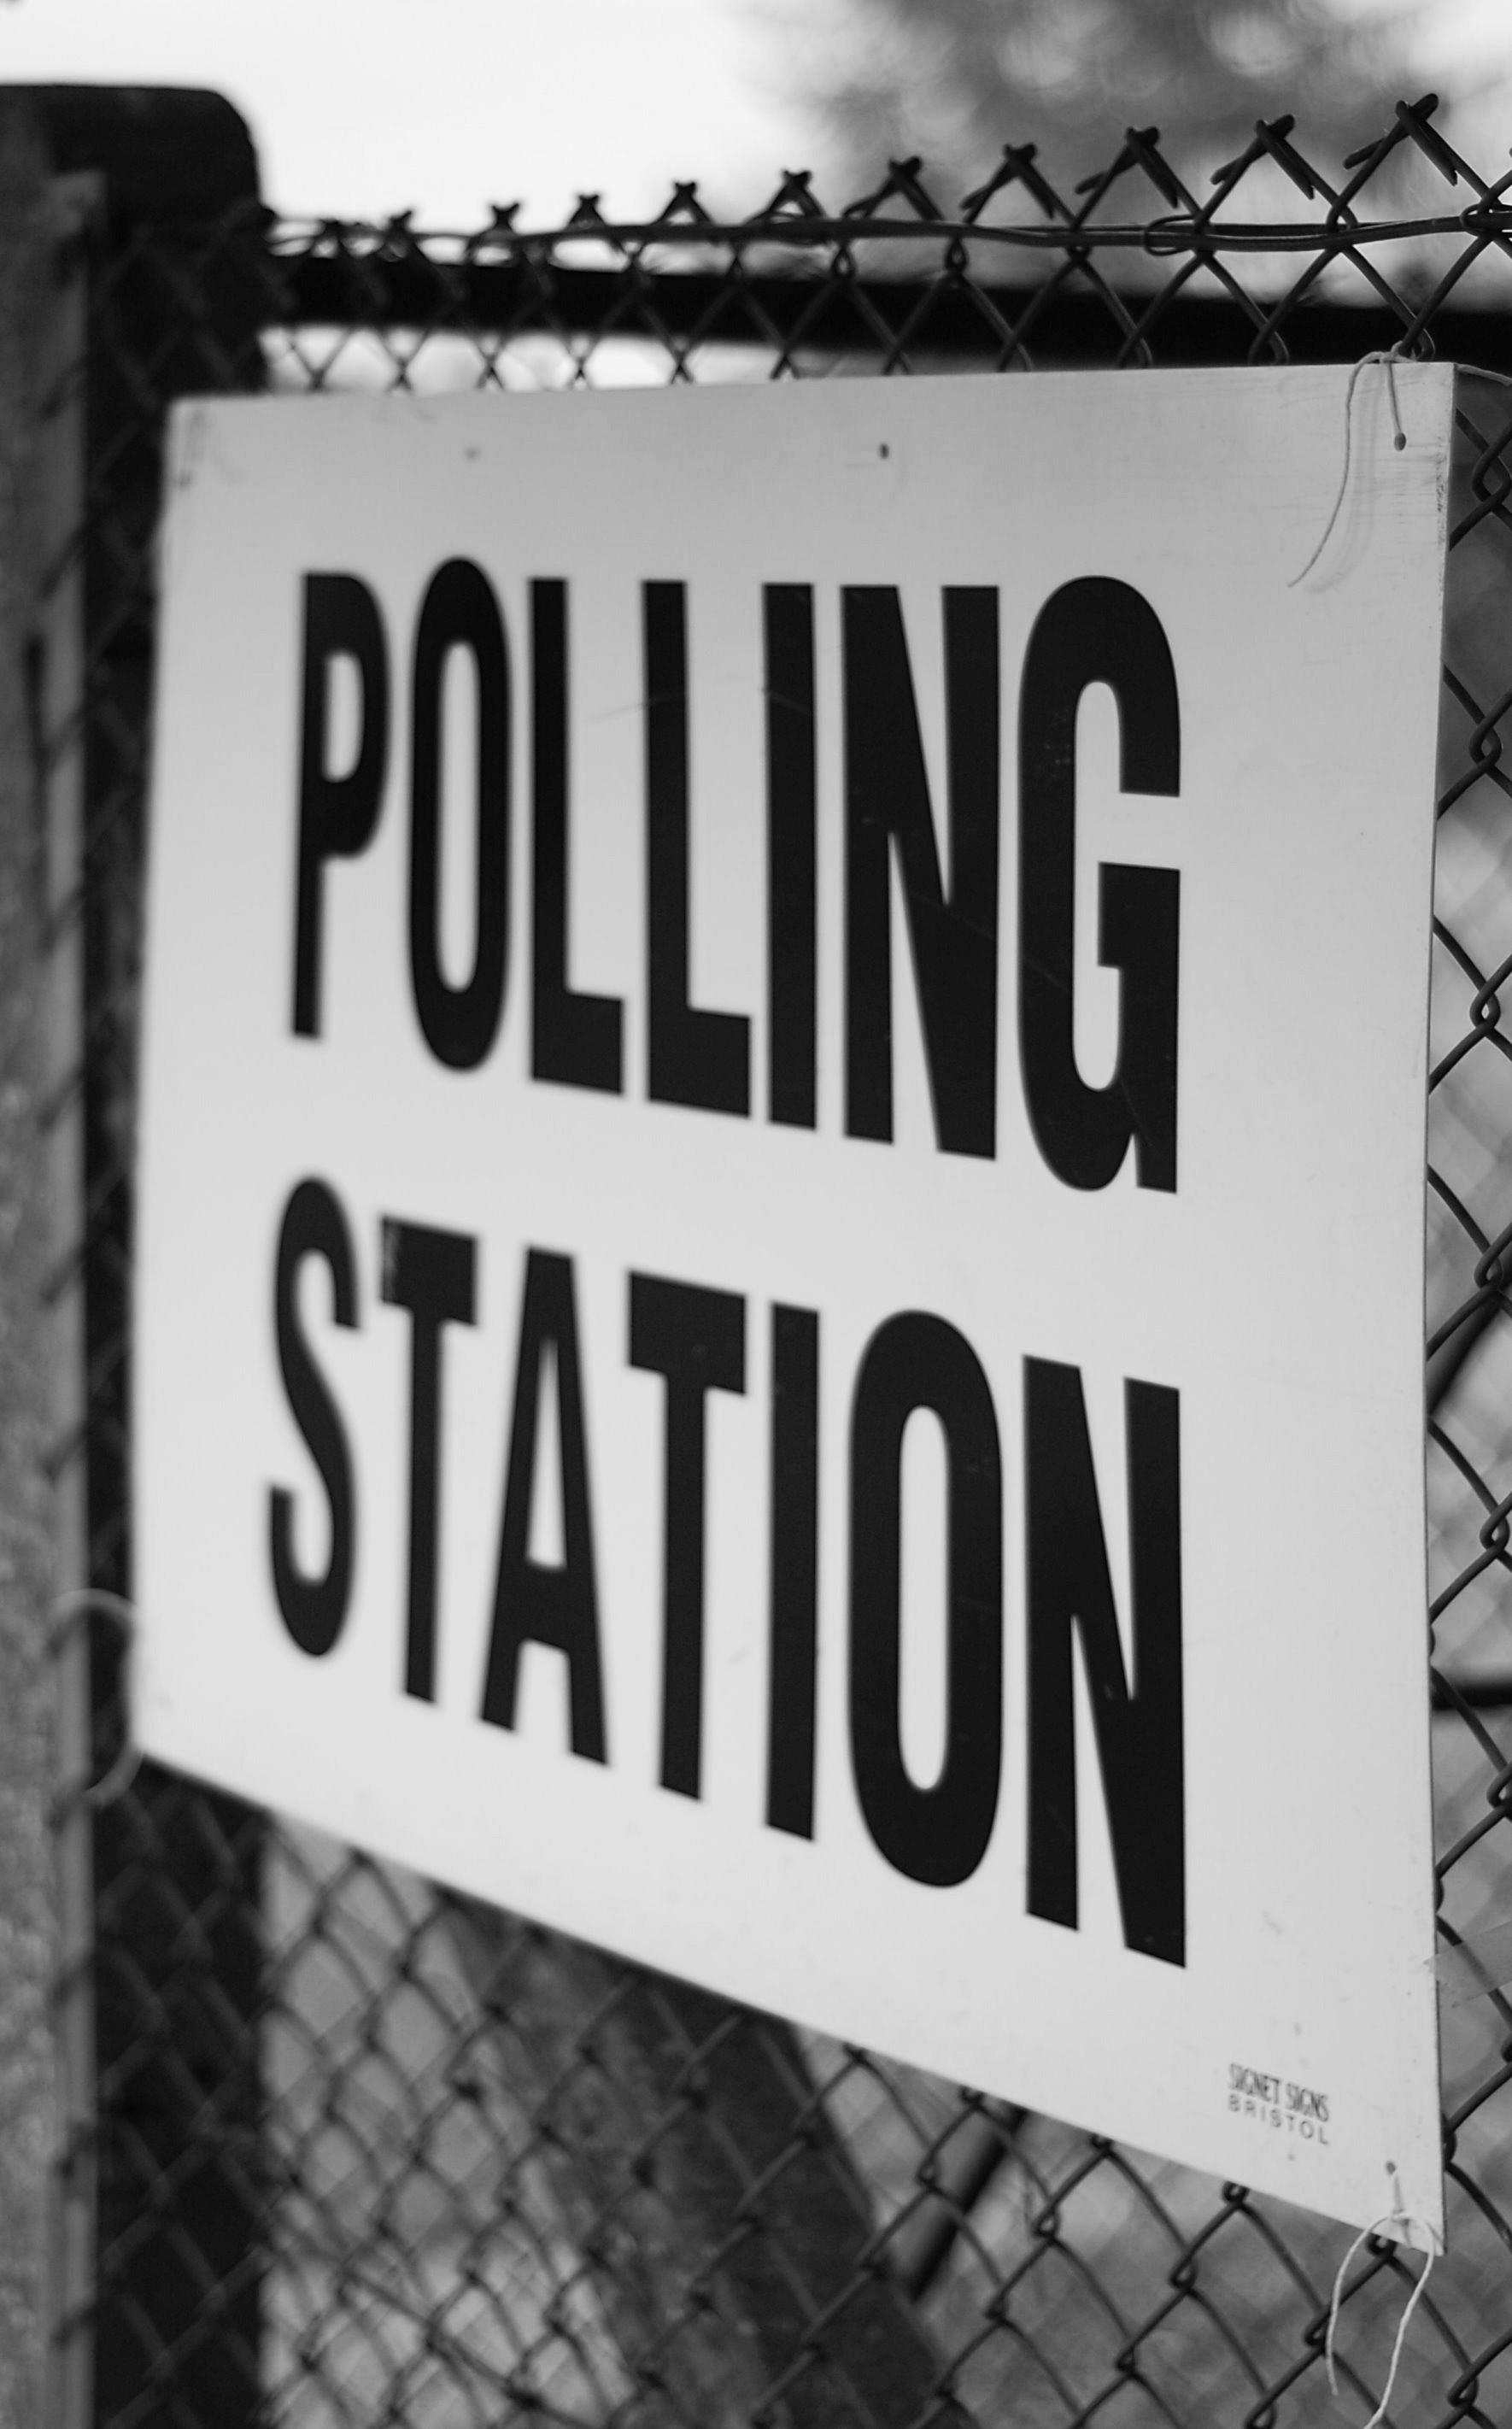 Polling Station Sign | Martin Bamford  -  Foter  -  CC BY